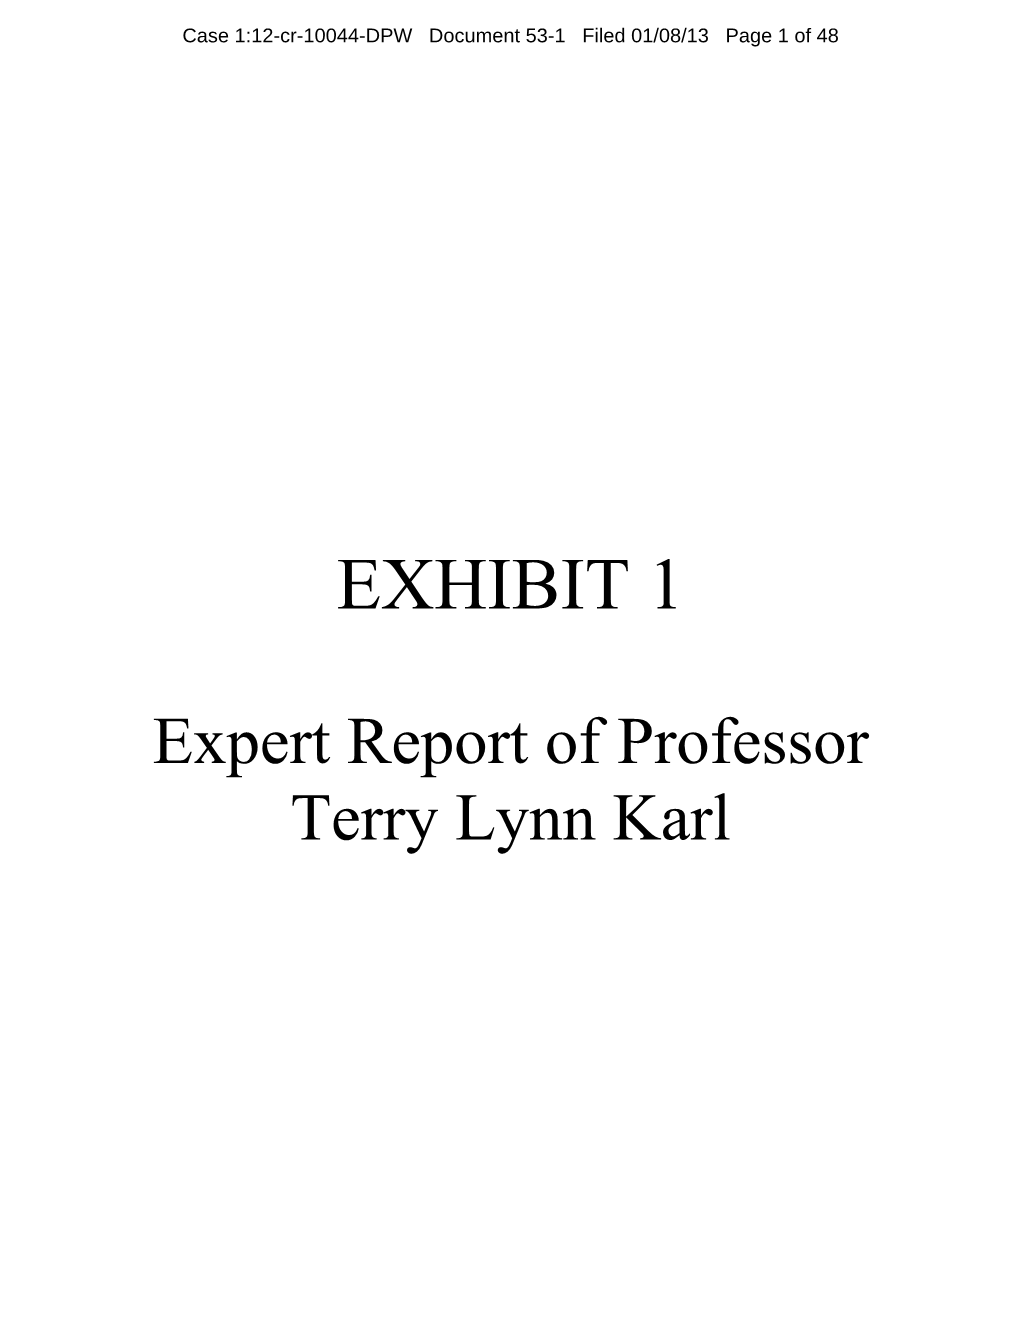 Expert Report of Professor Terry Lynn Karl, Stanford University